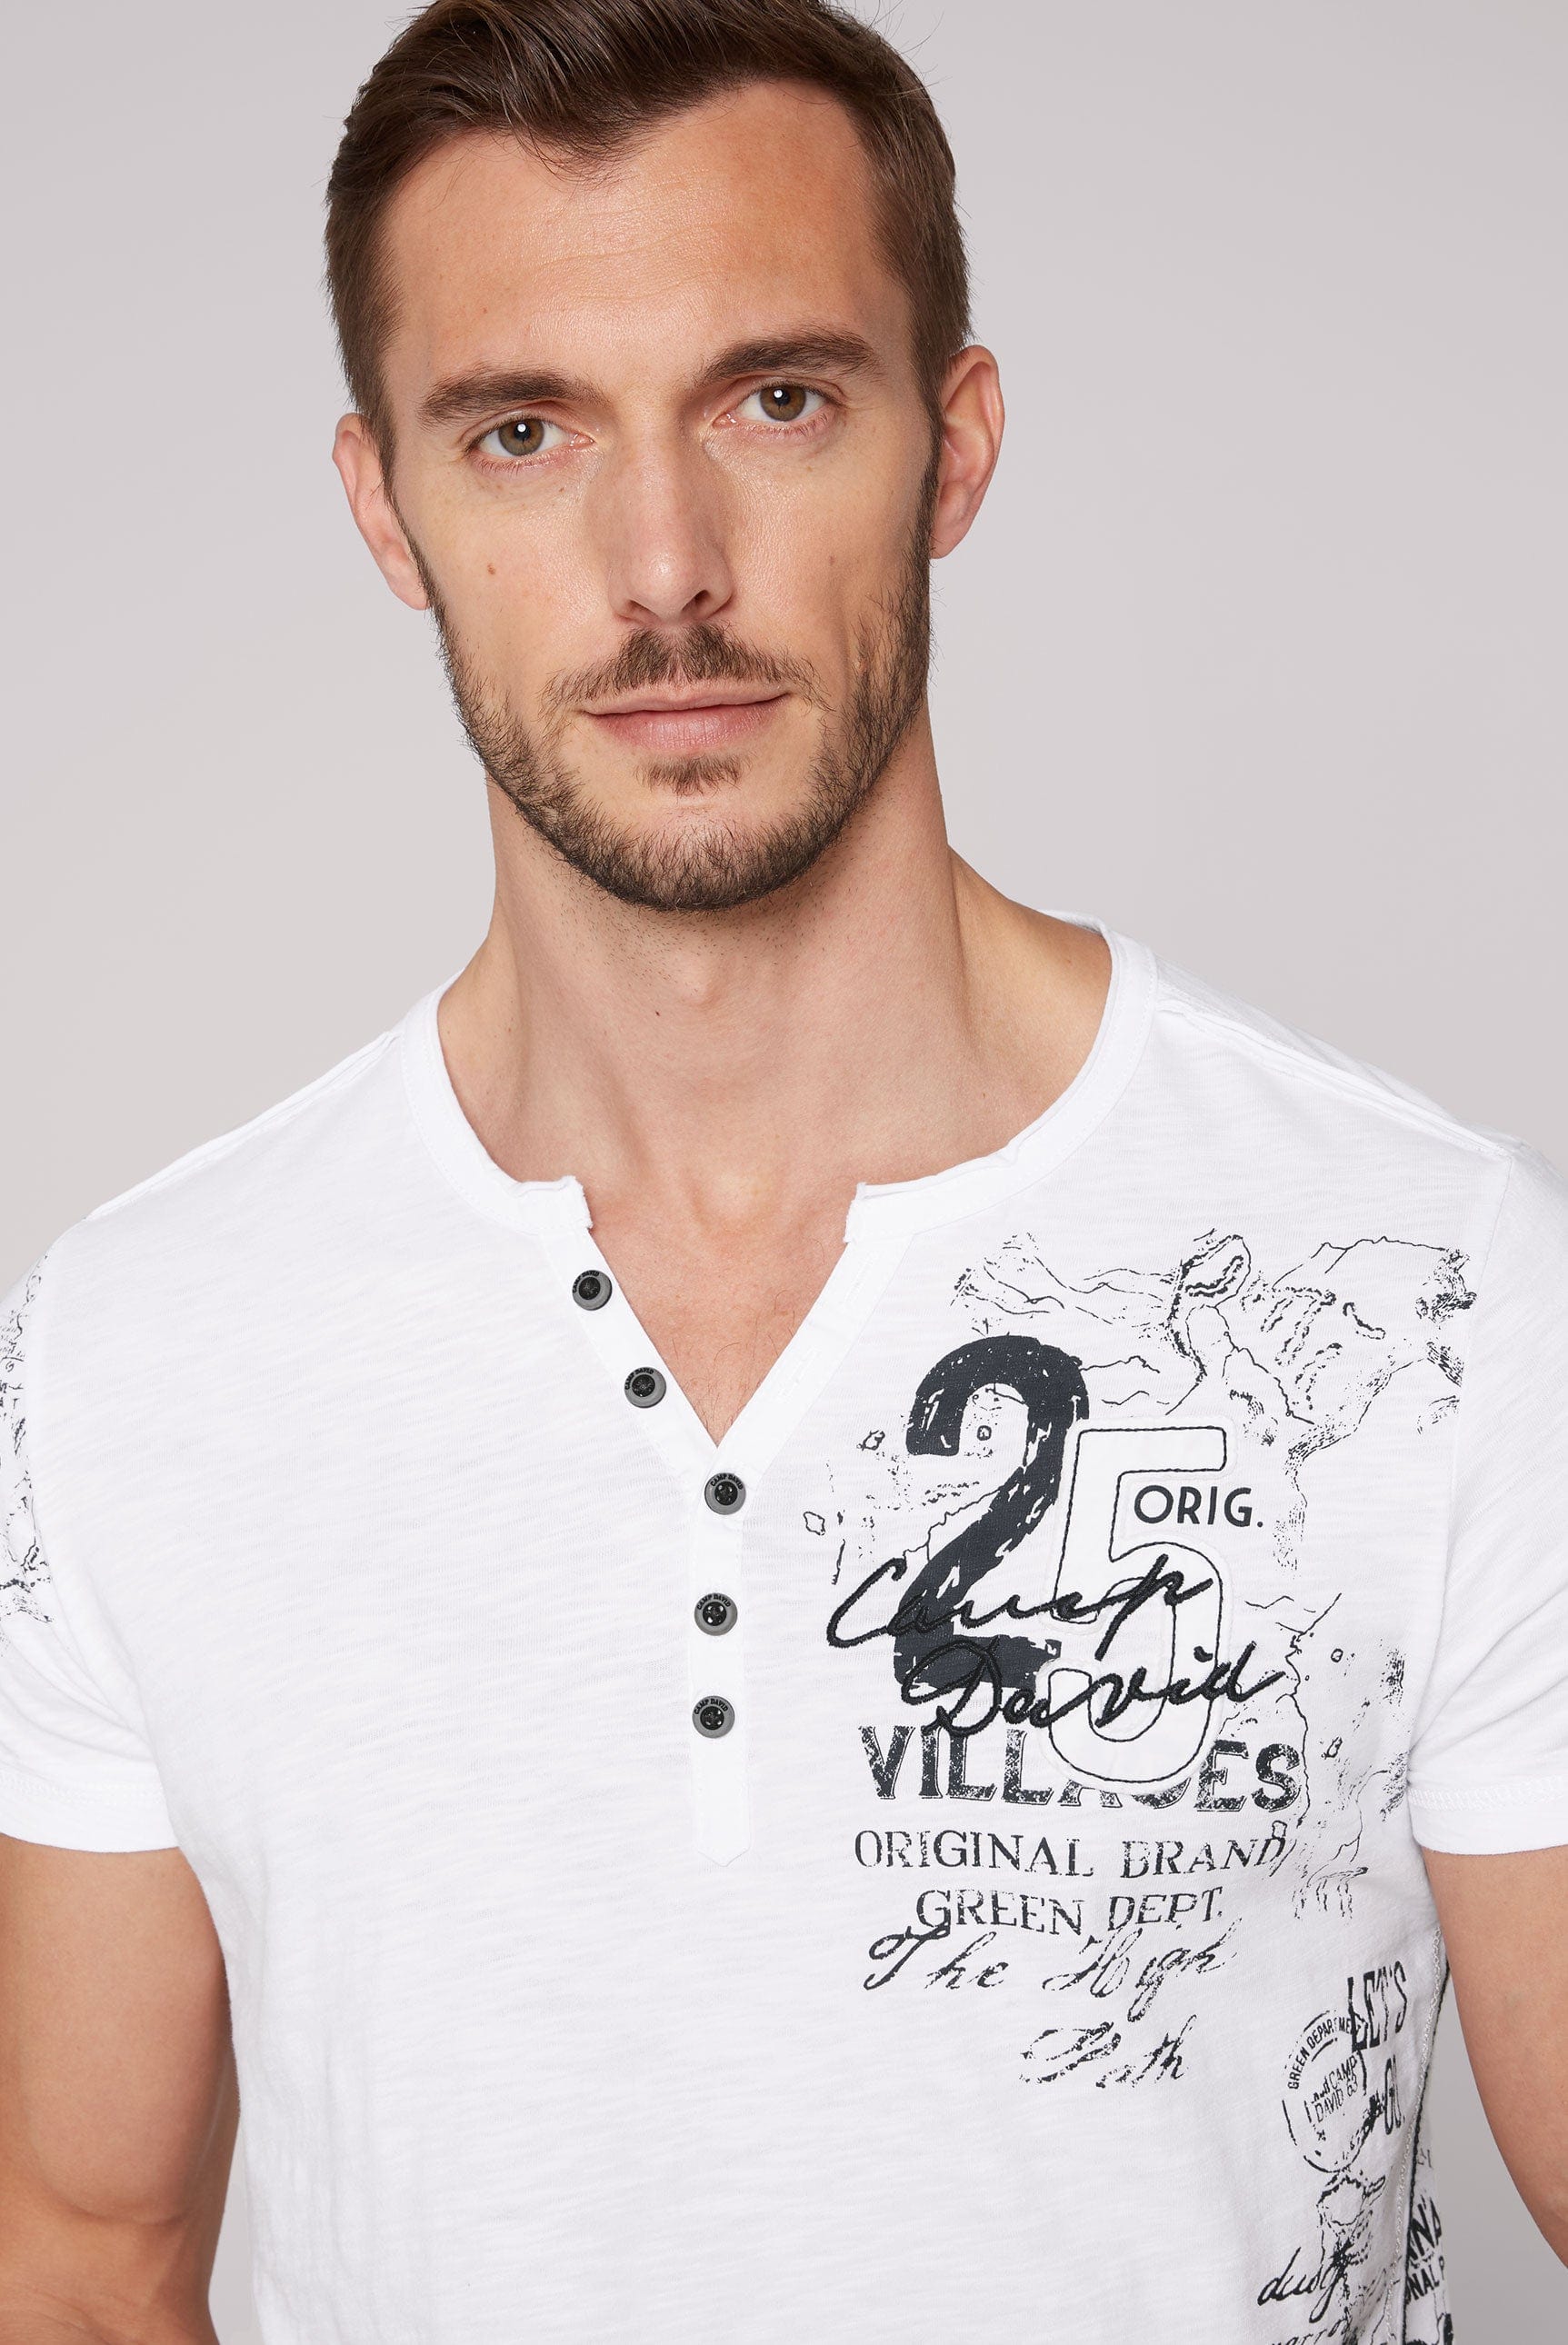 Camp David T-Shirt, optic Terre, Stateshop white Chique v-neck button Fashion 